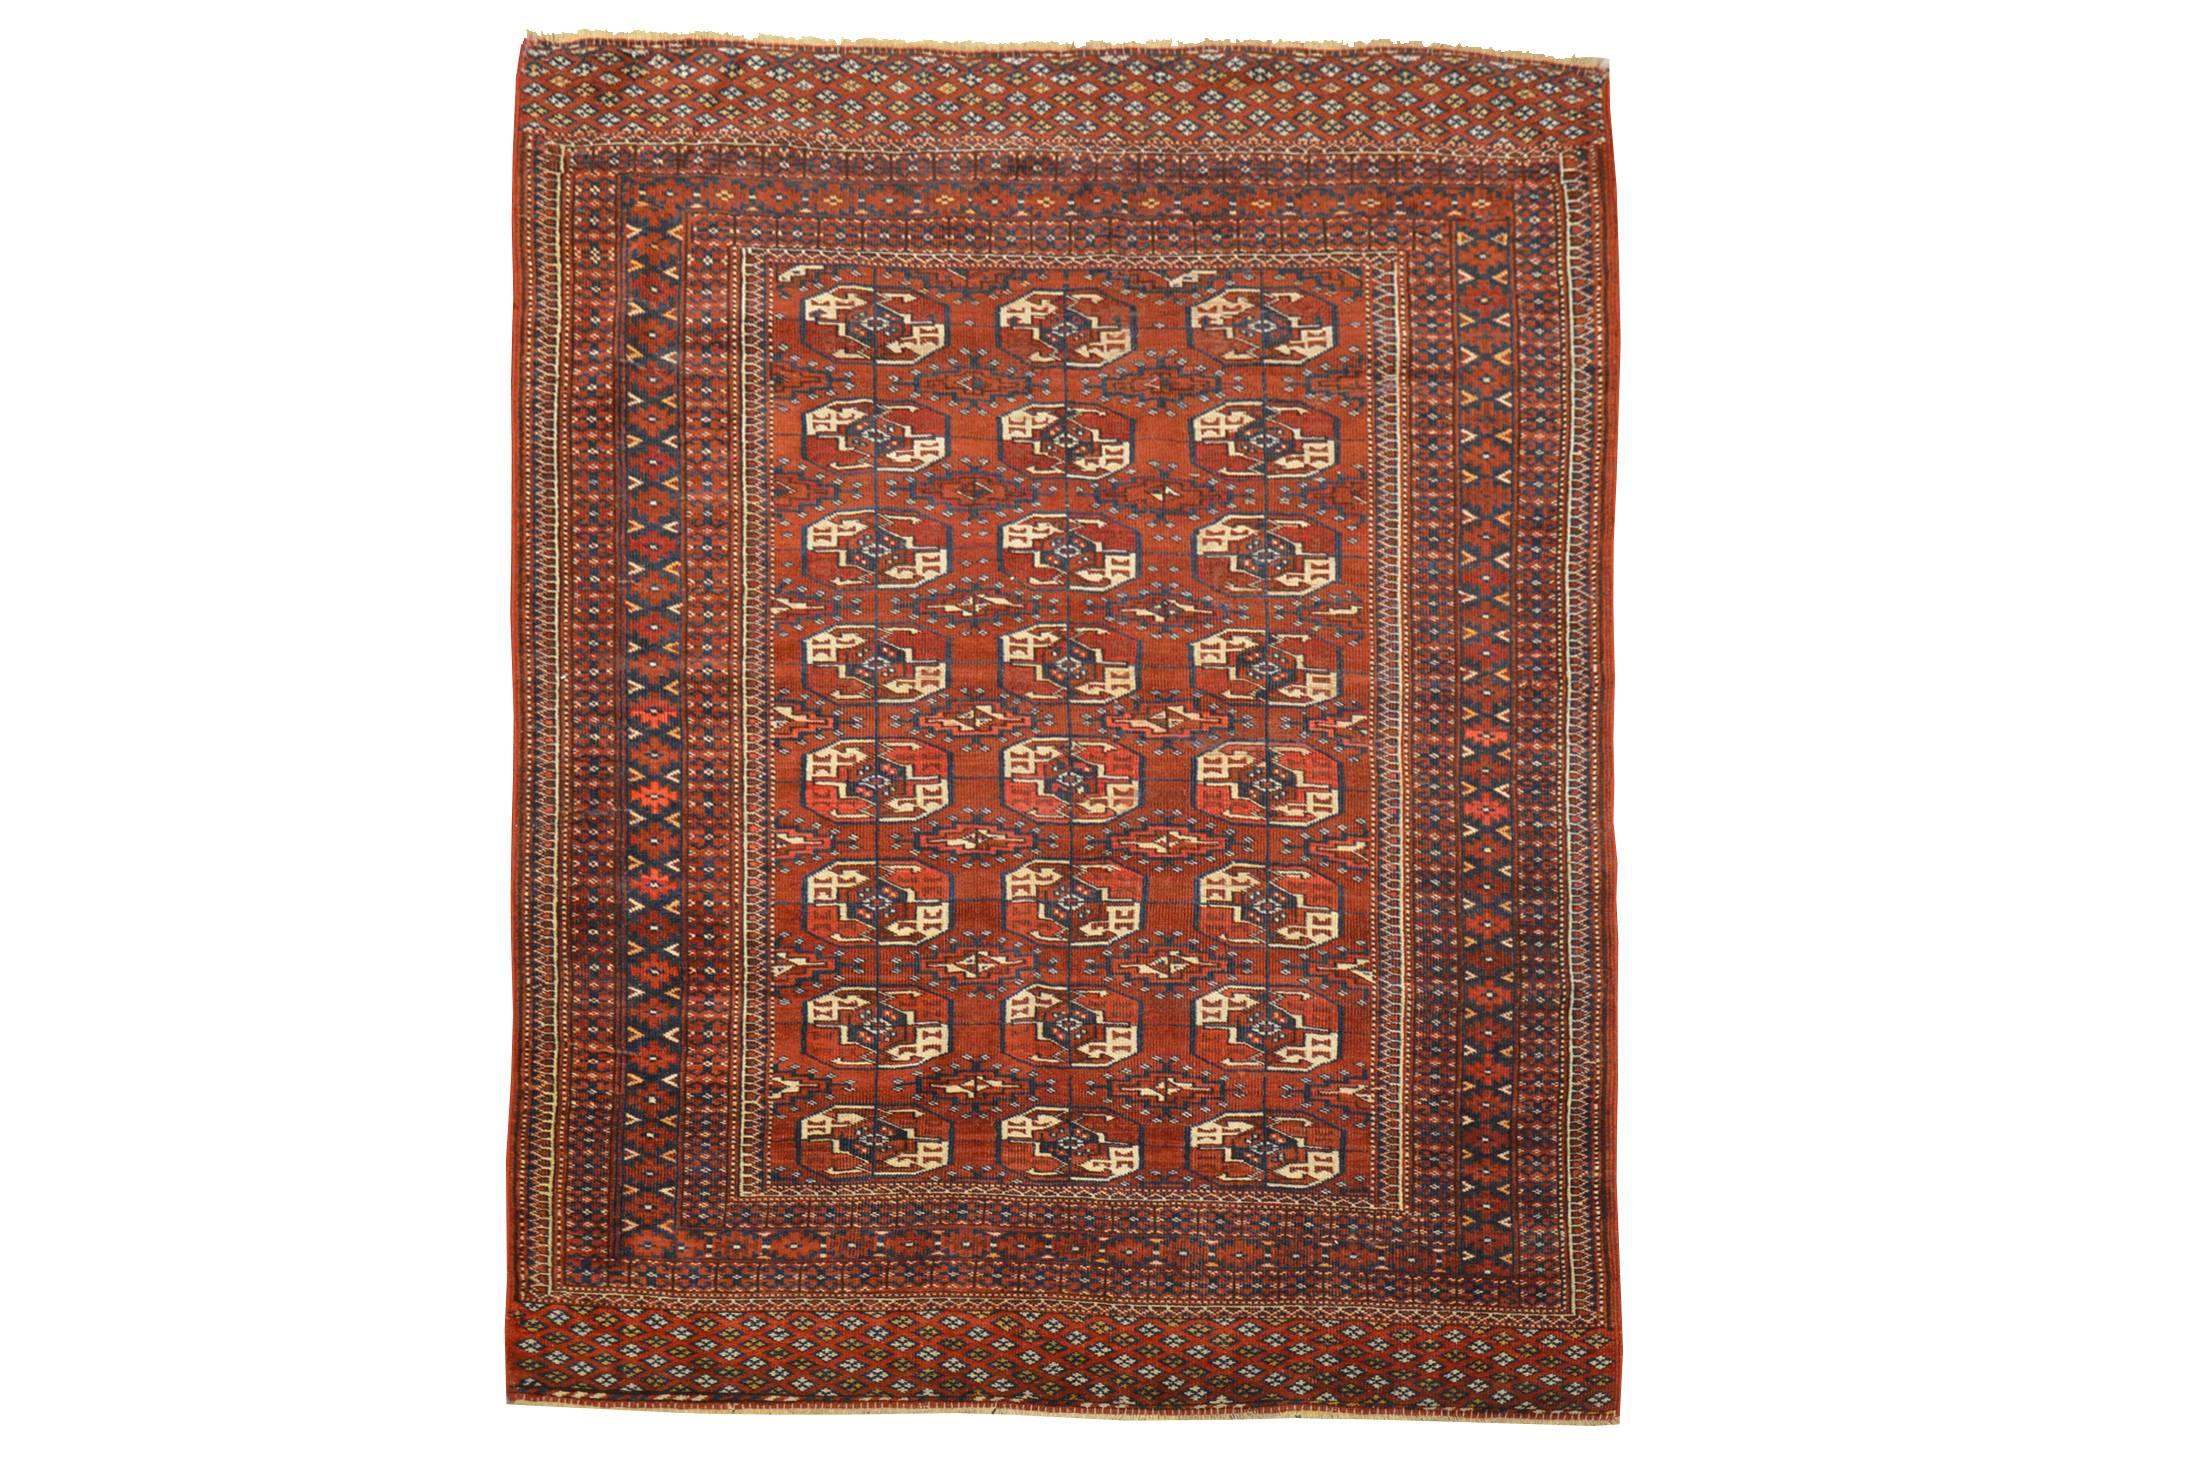 Tribal Bukhara Carpet, circa 1900